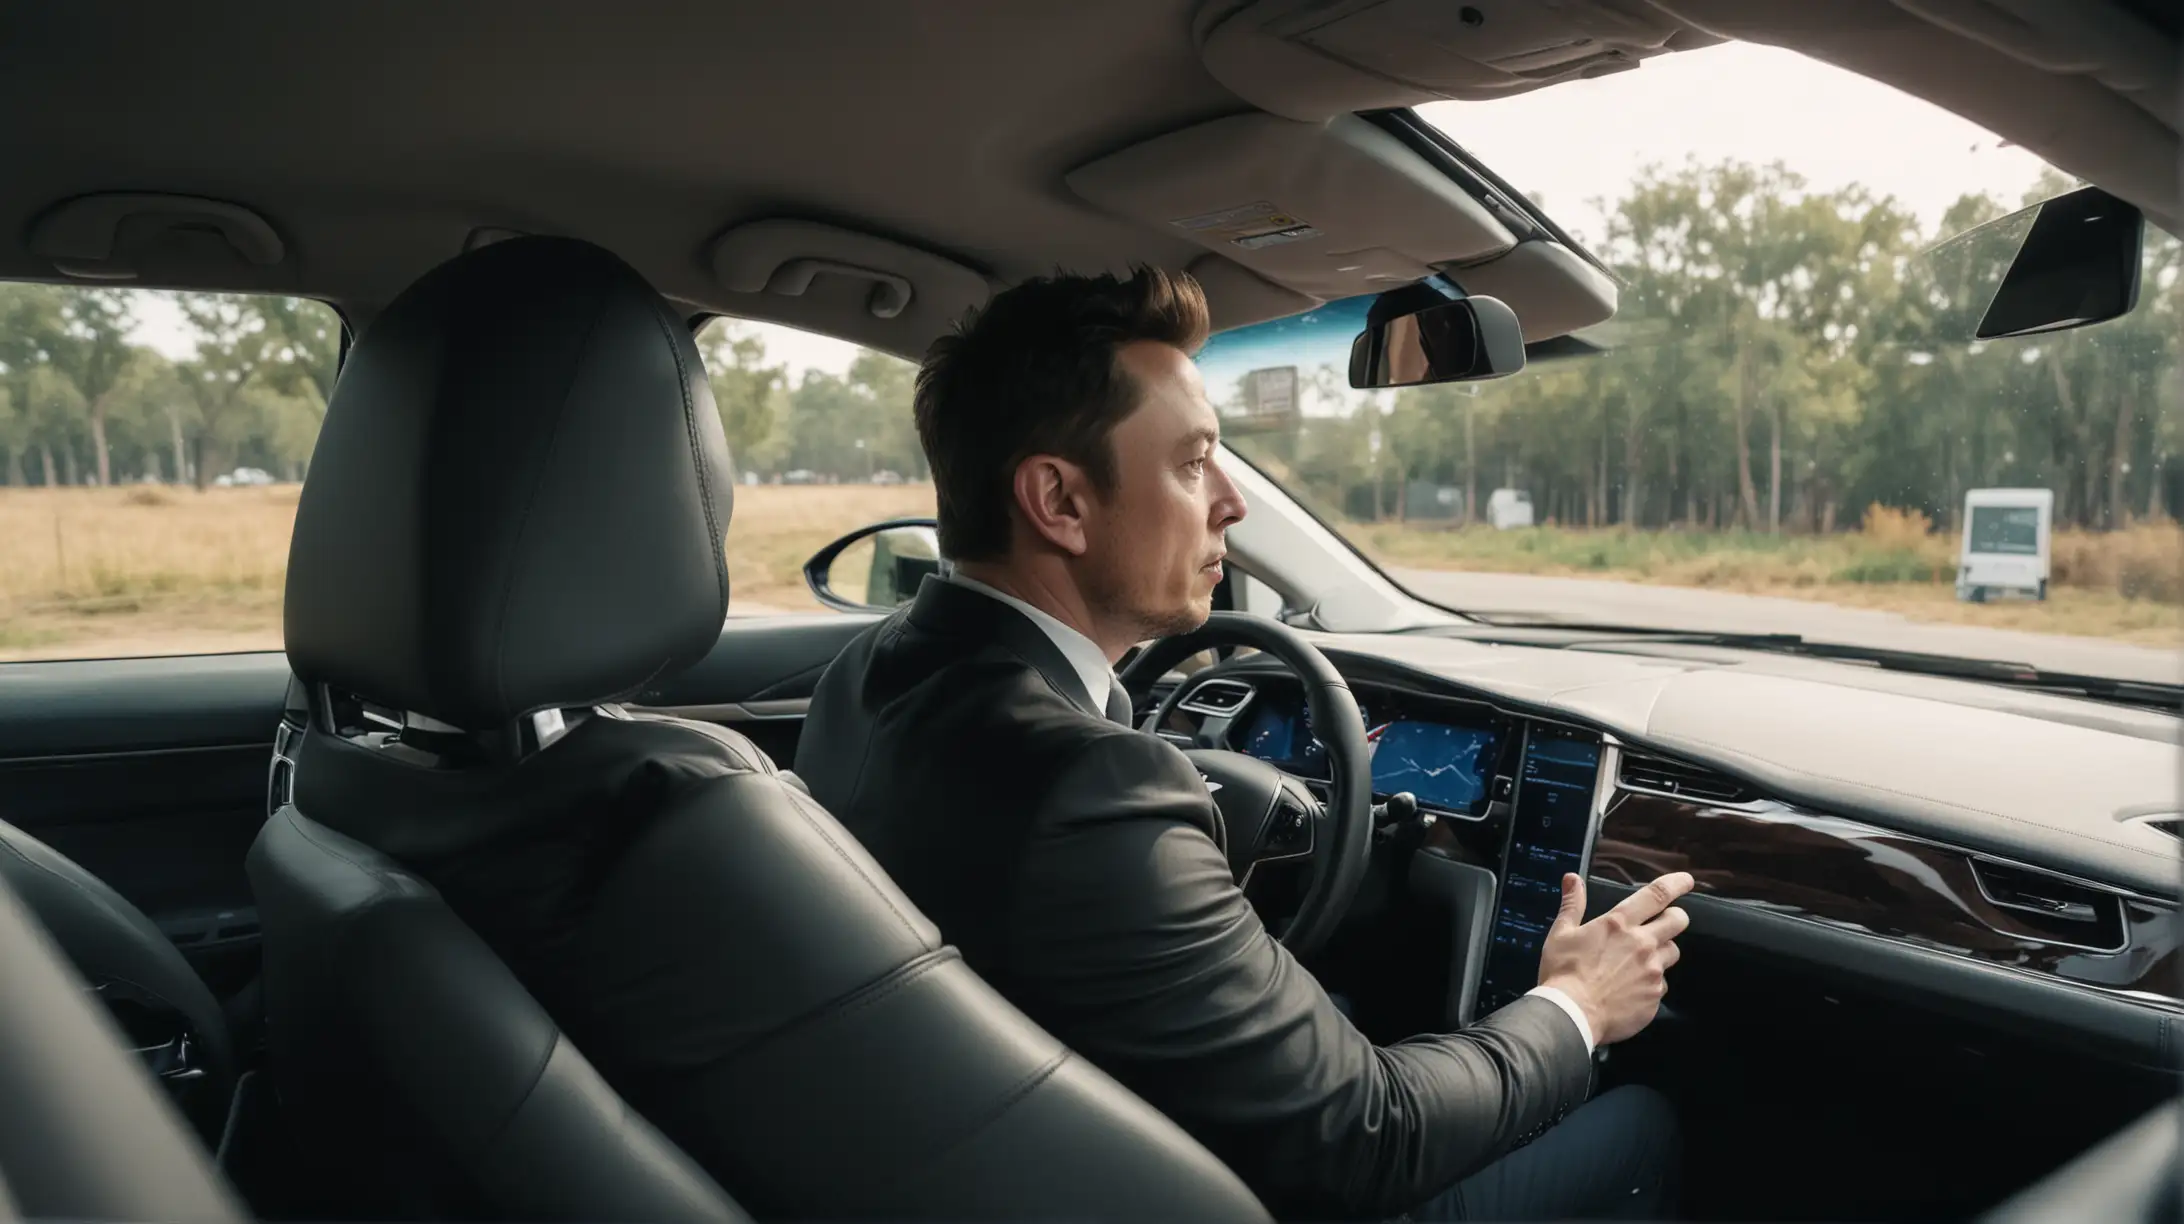 Elon Musk Driving Tesla Back View Face Inside Car Shot